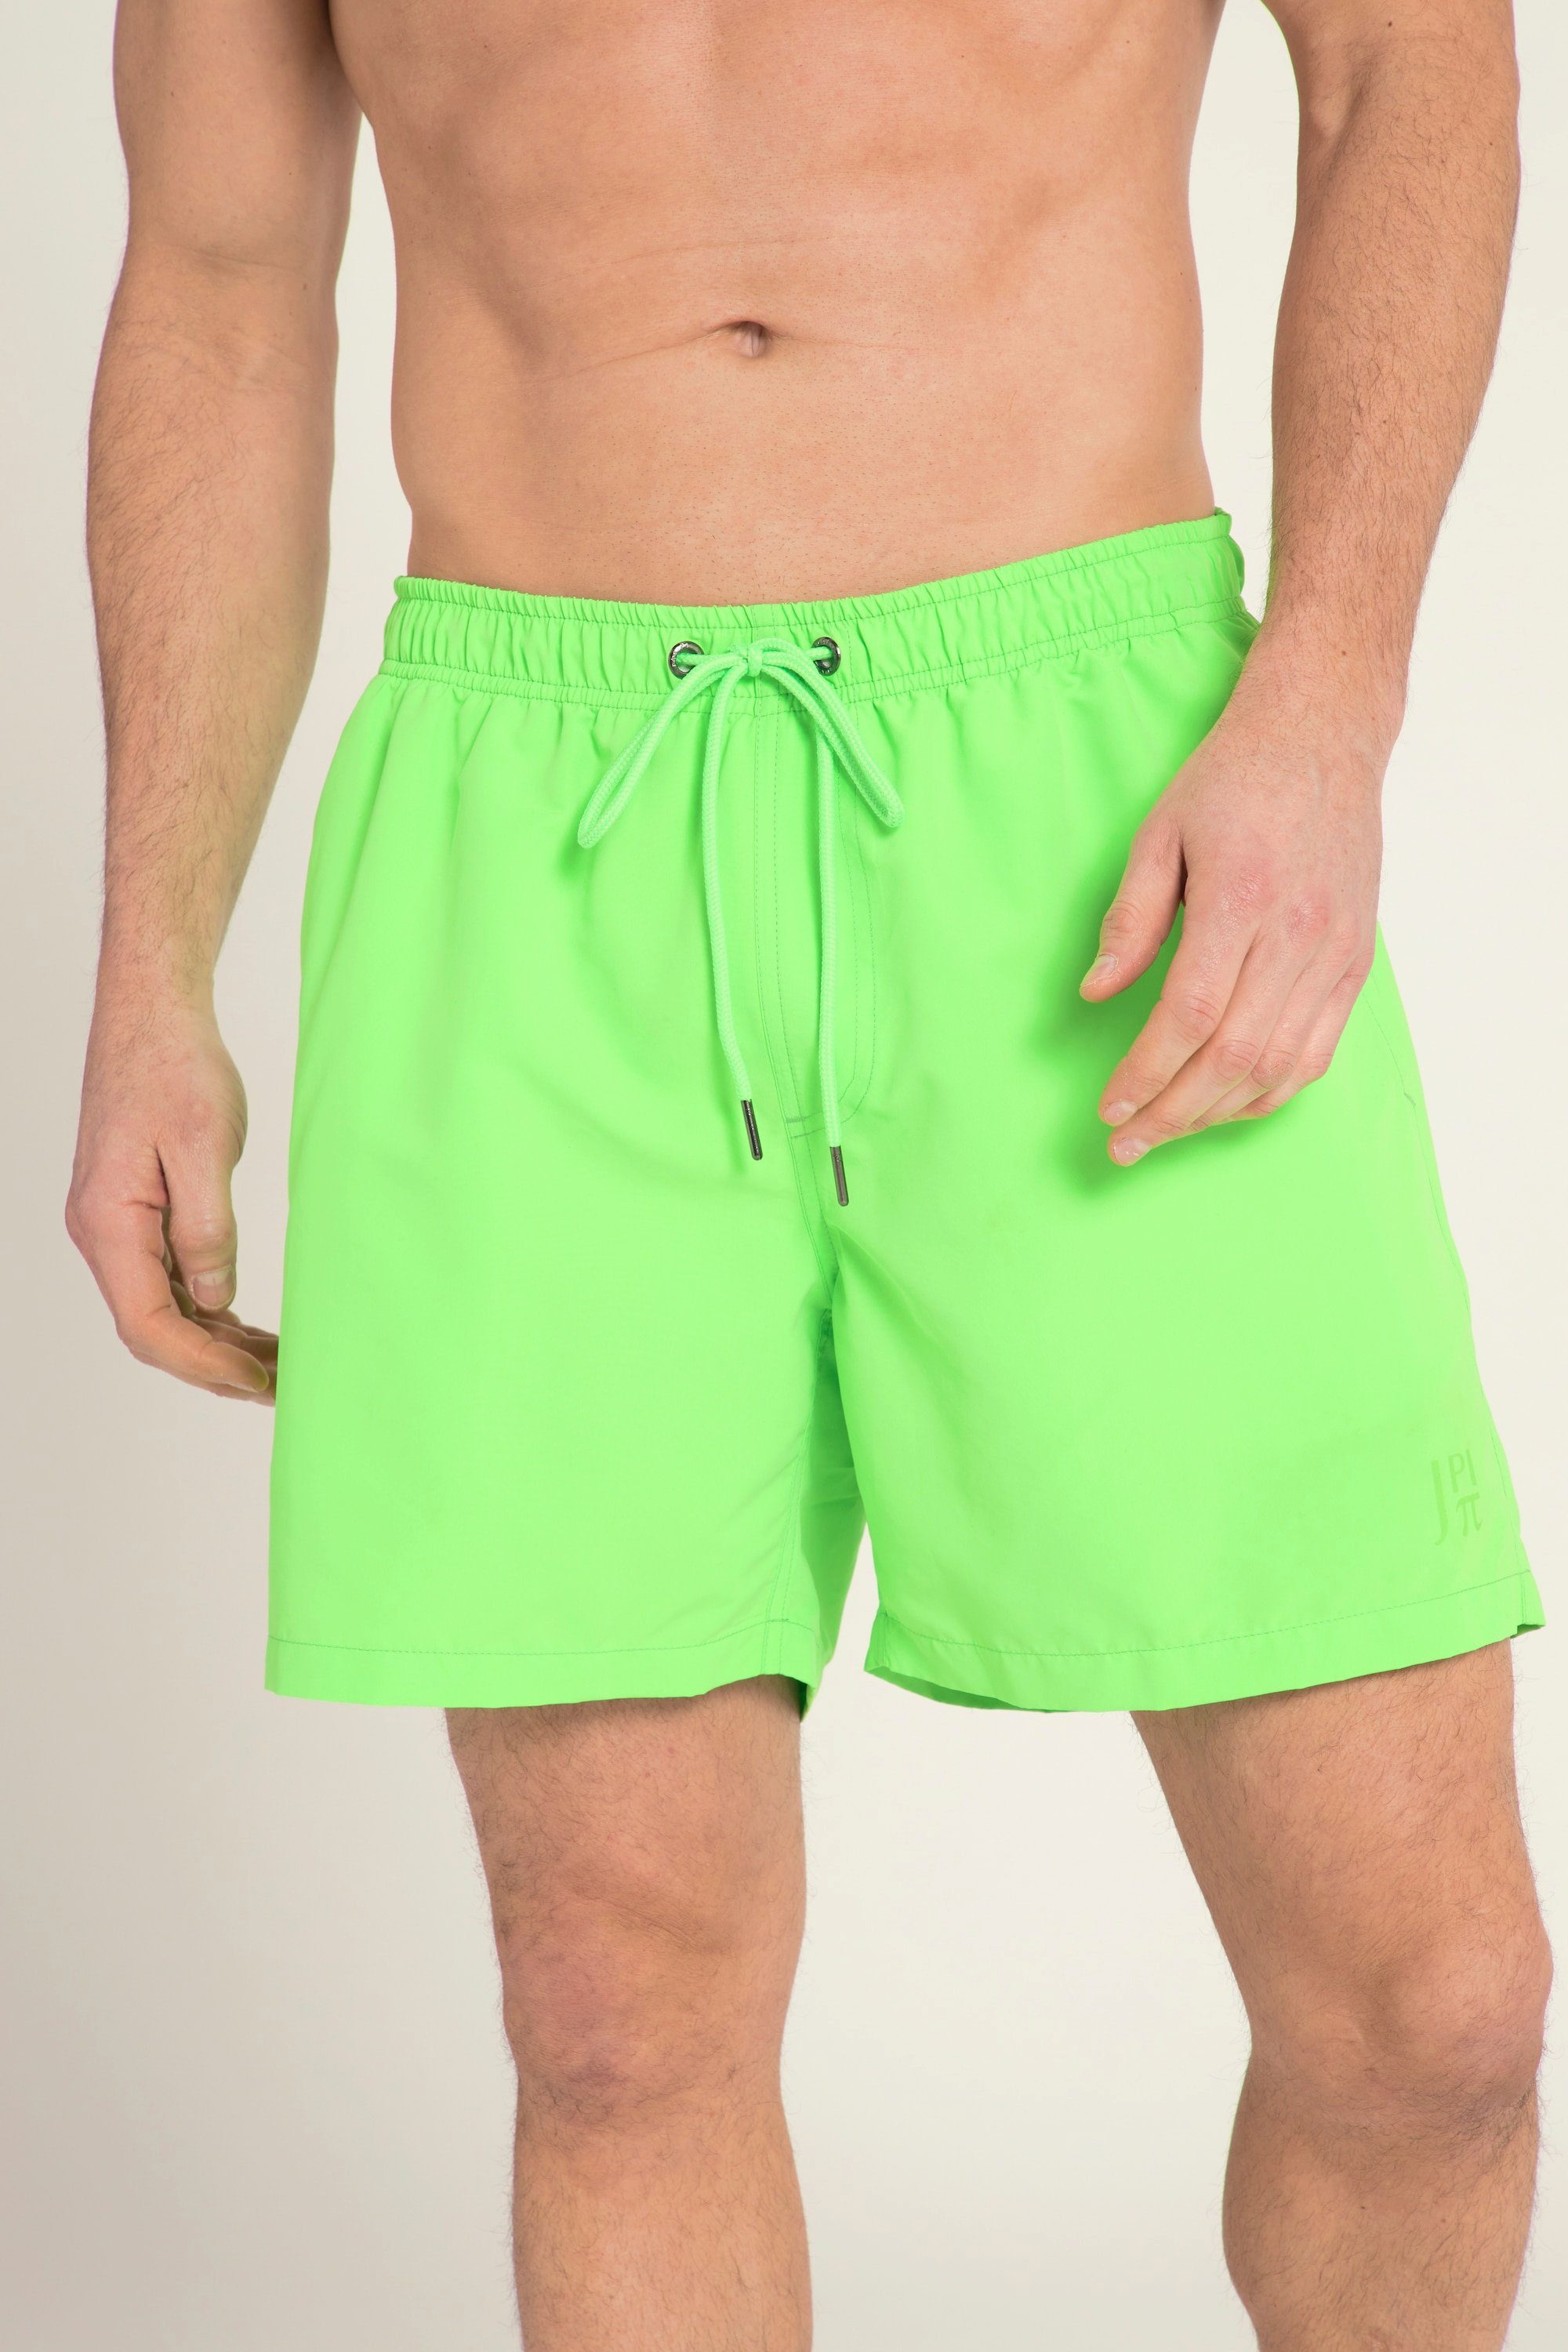 JP1880 Badehose Badeshorts Beachwear Elastikbund Zipptasche grün